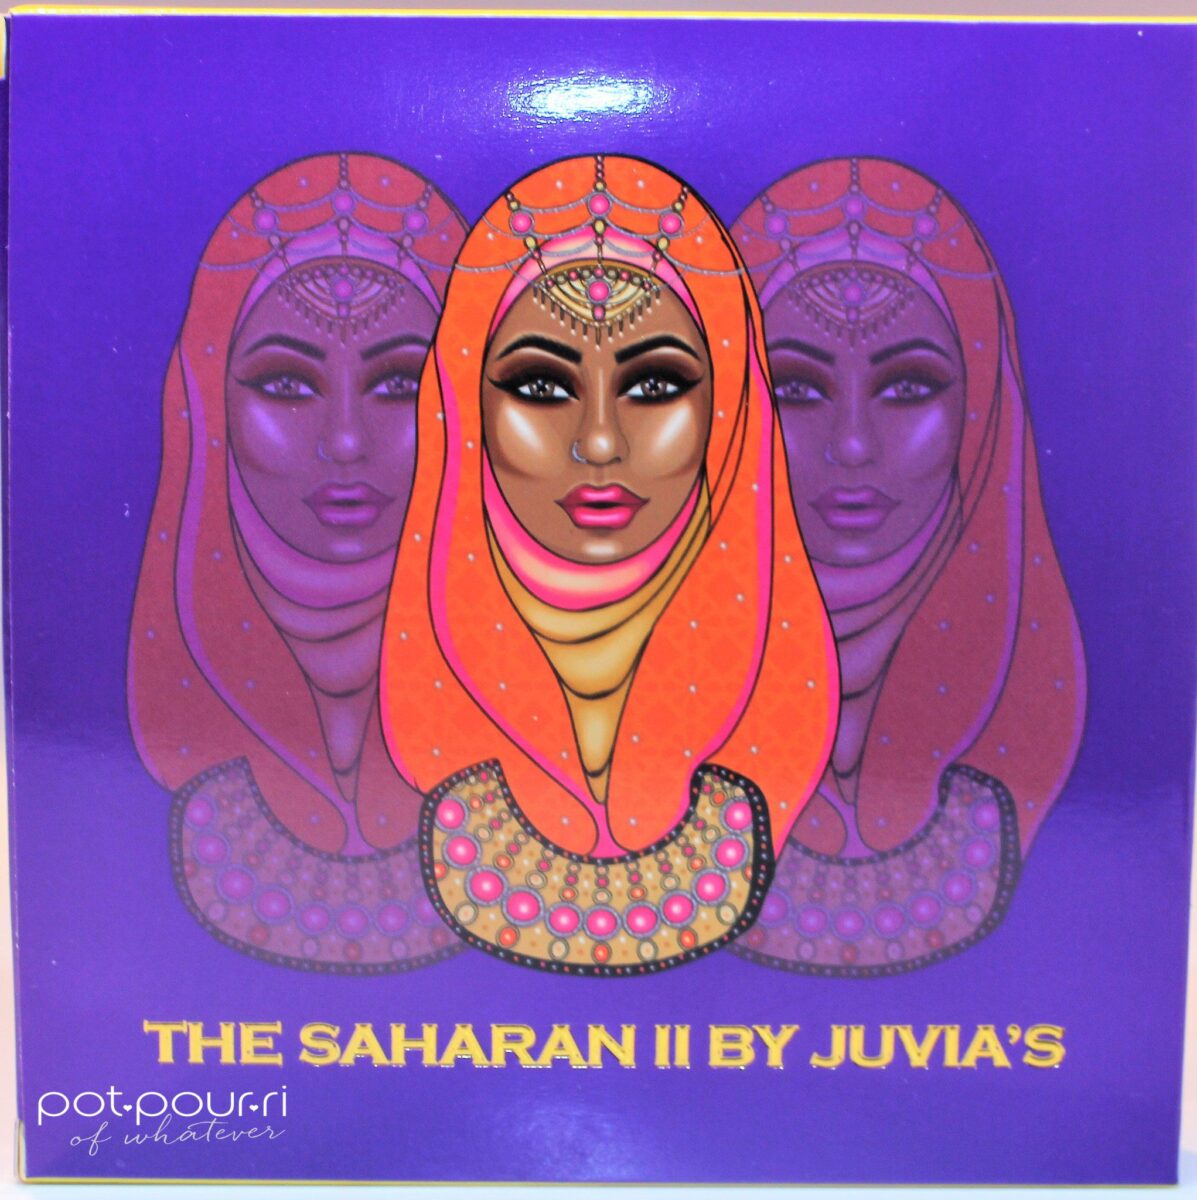 Juvia's Saharan 11 Eyeshadow Palette packaging